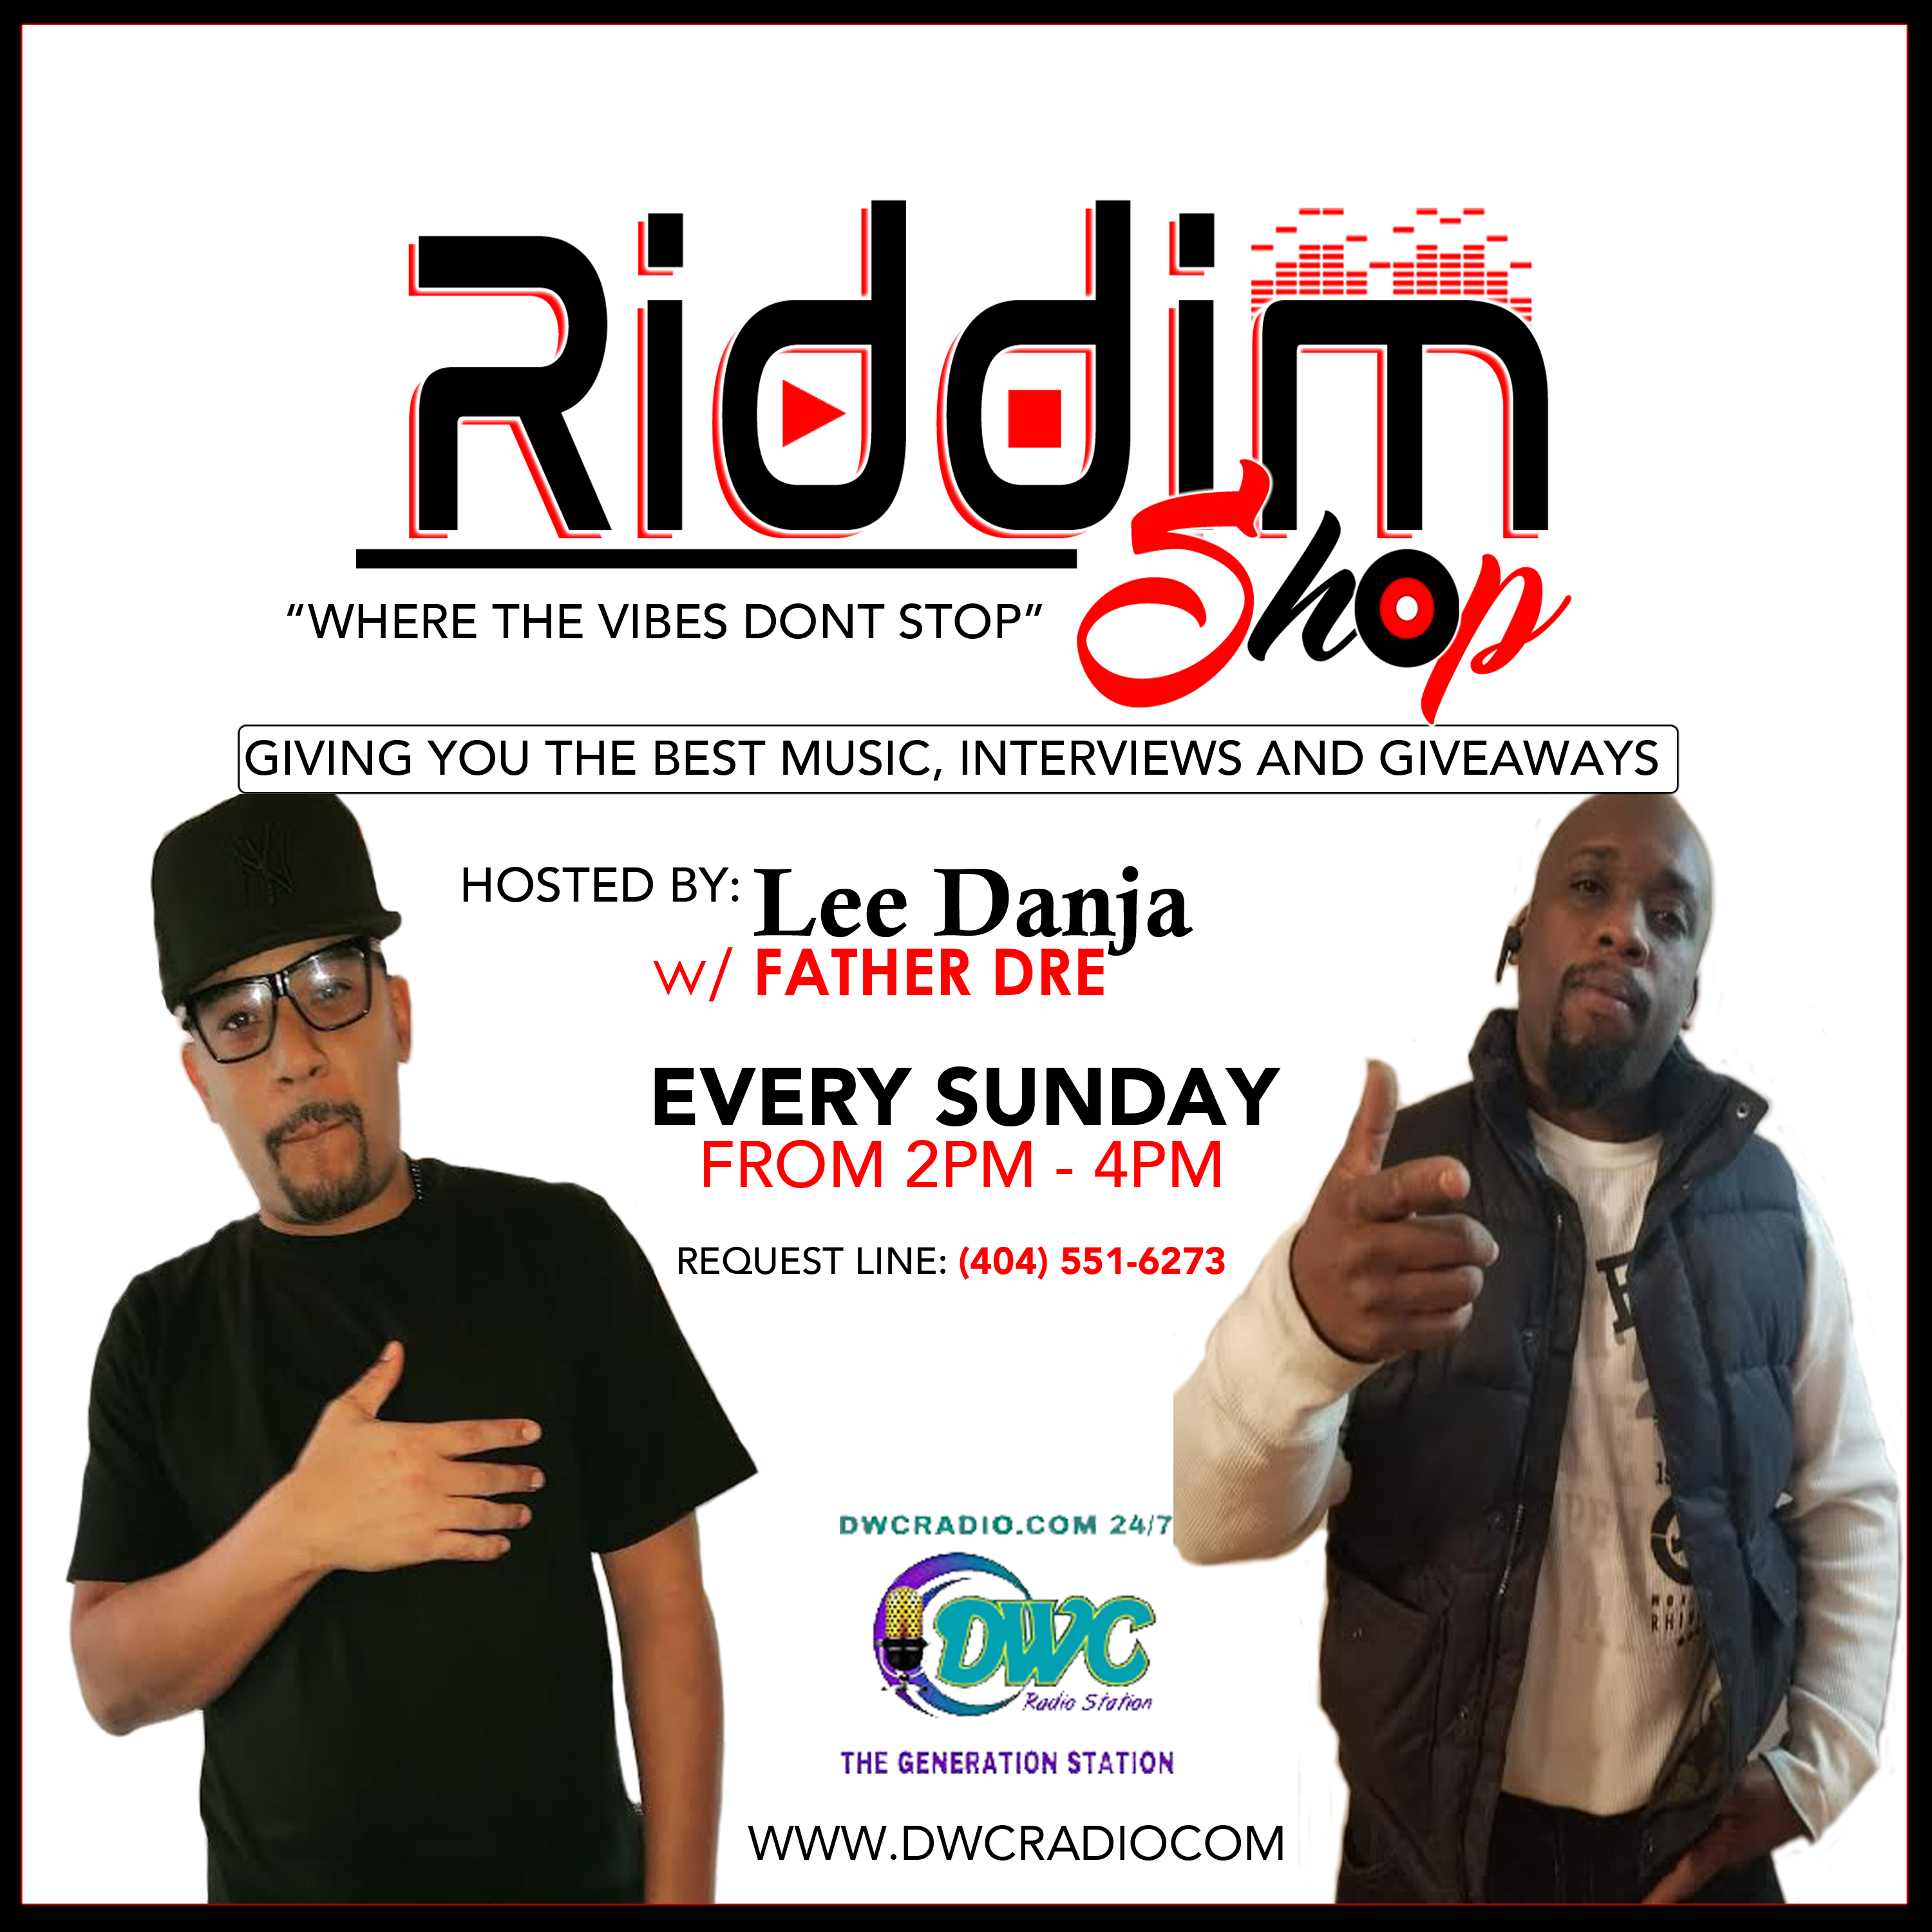 Riddim_Shop_Radio